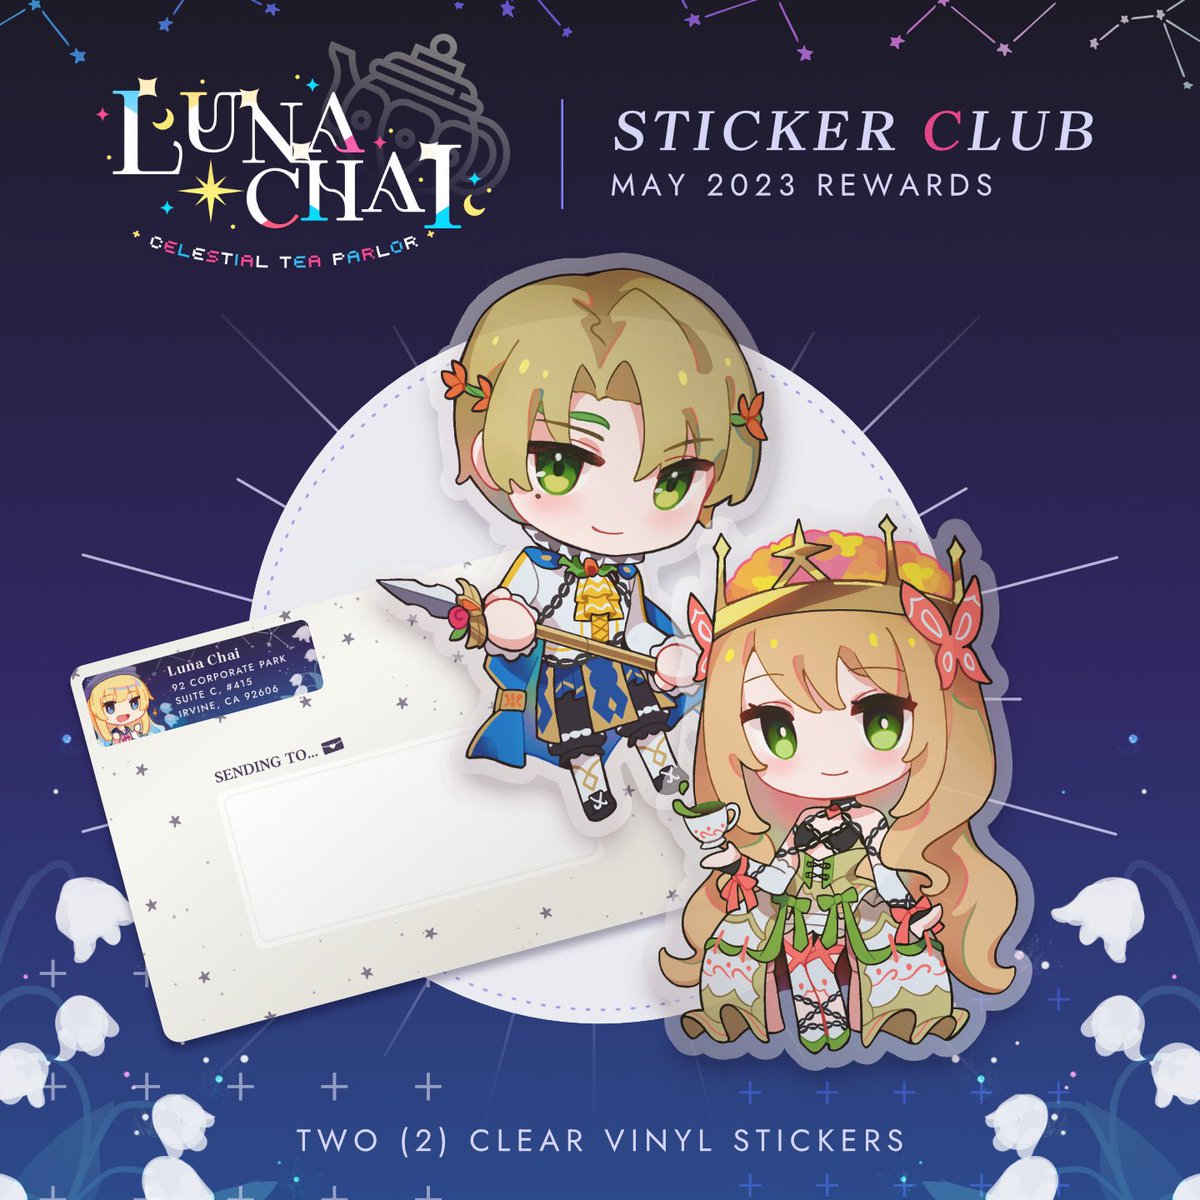 「April sticker club rewards have been mai」|luna chaiのイラスト